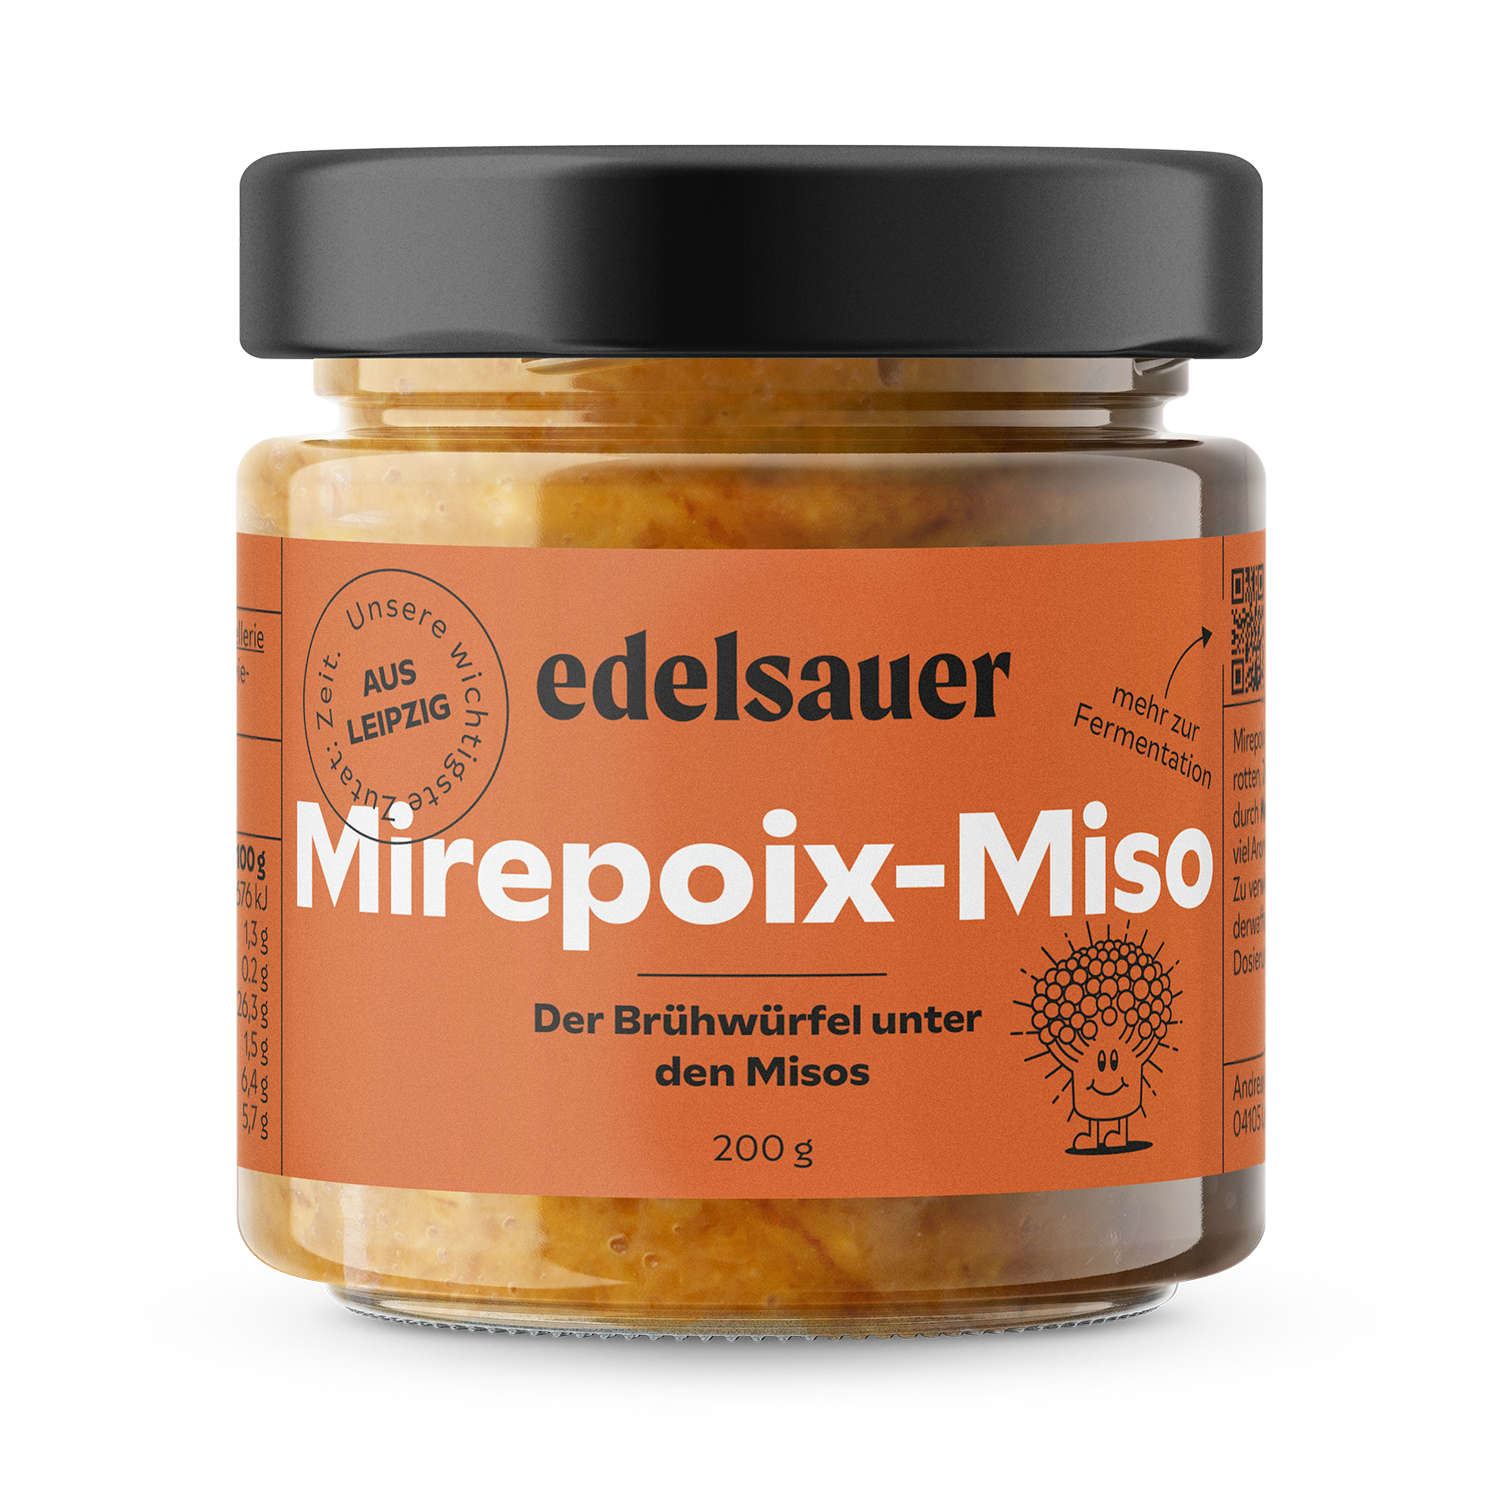 Mirepoix-Miso